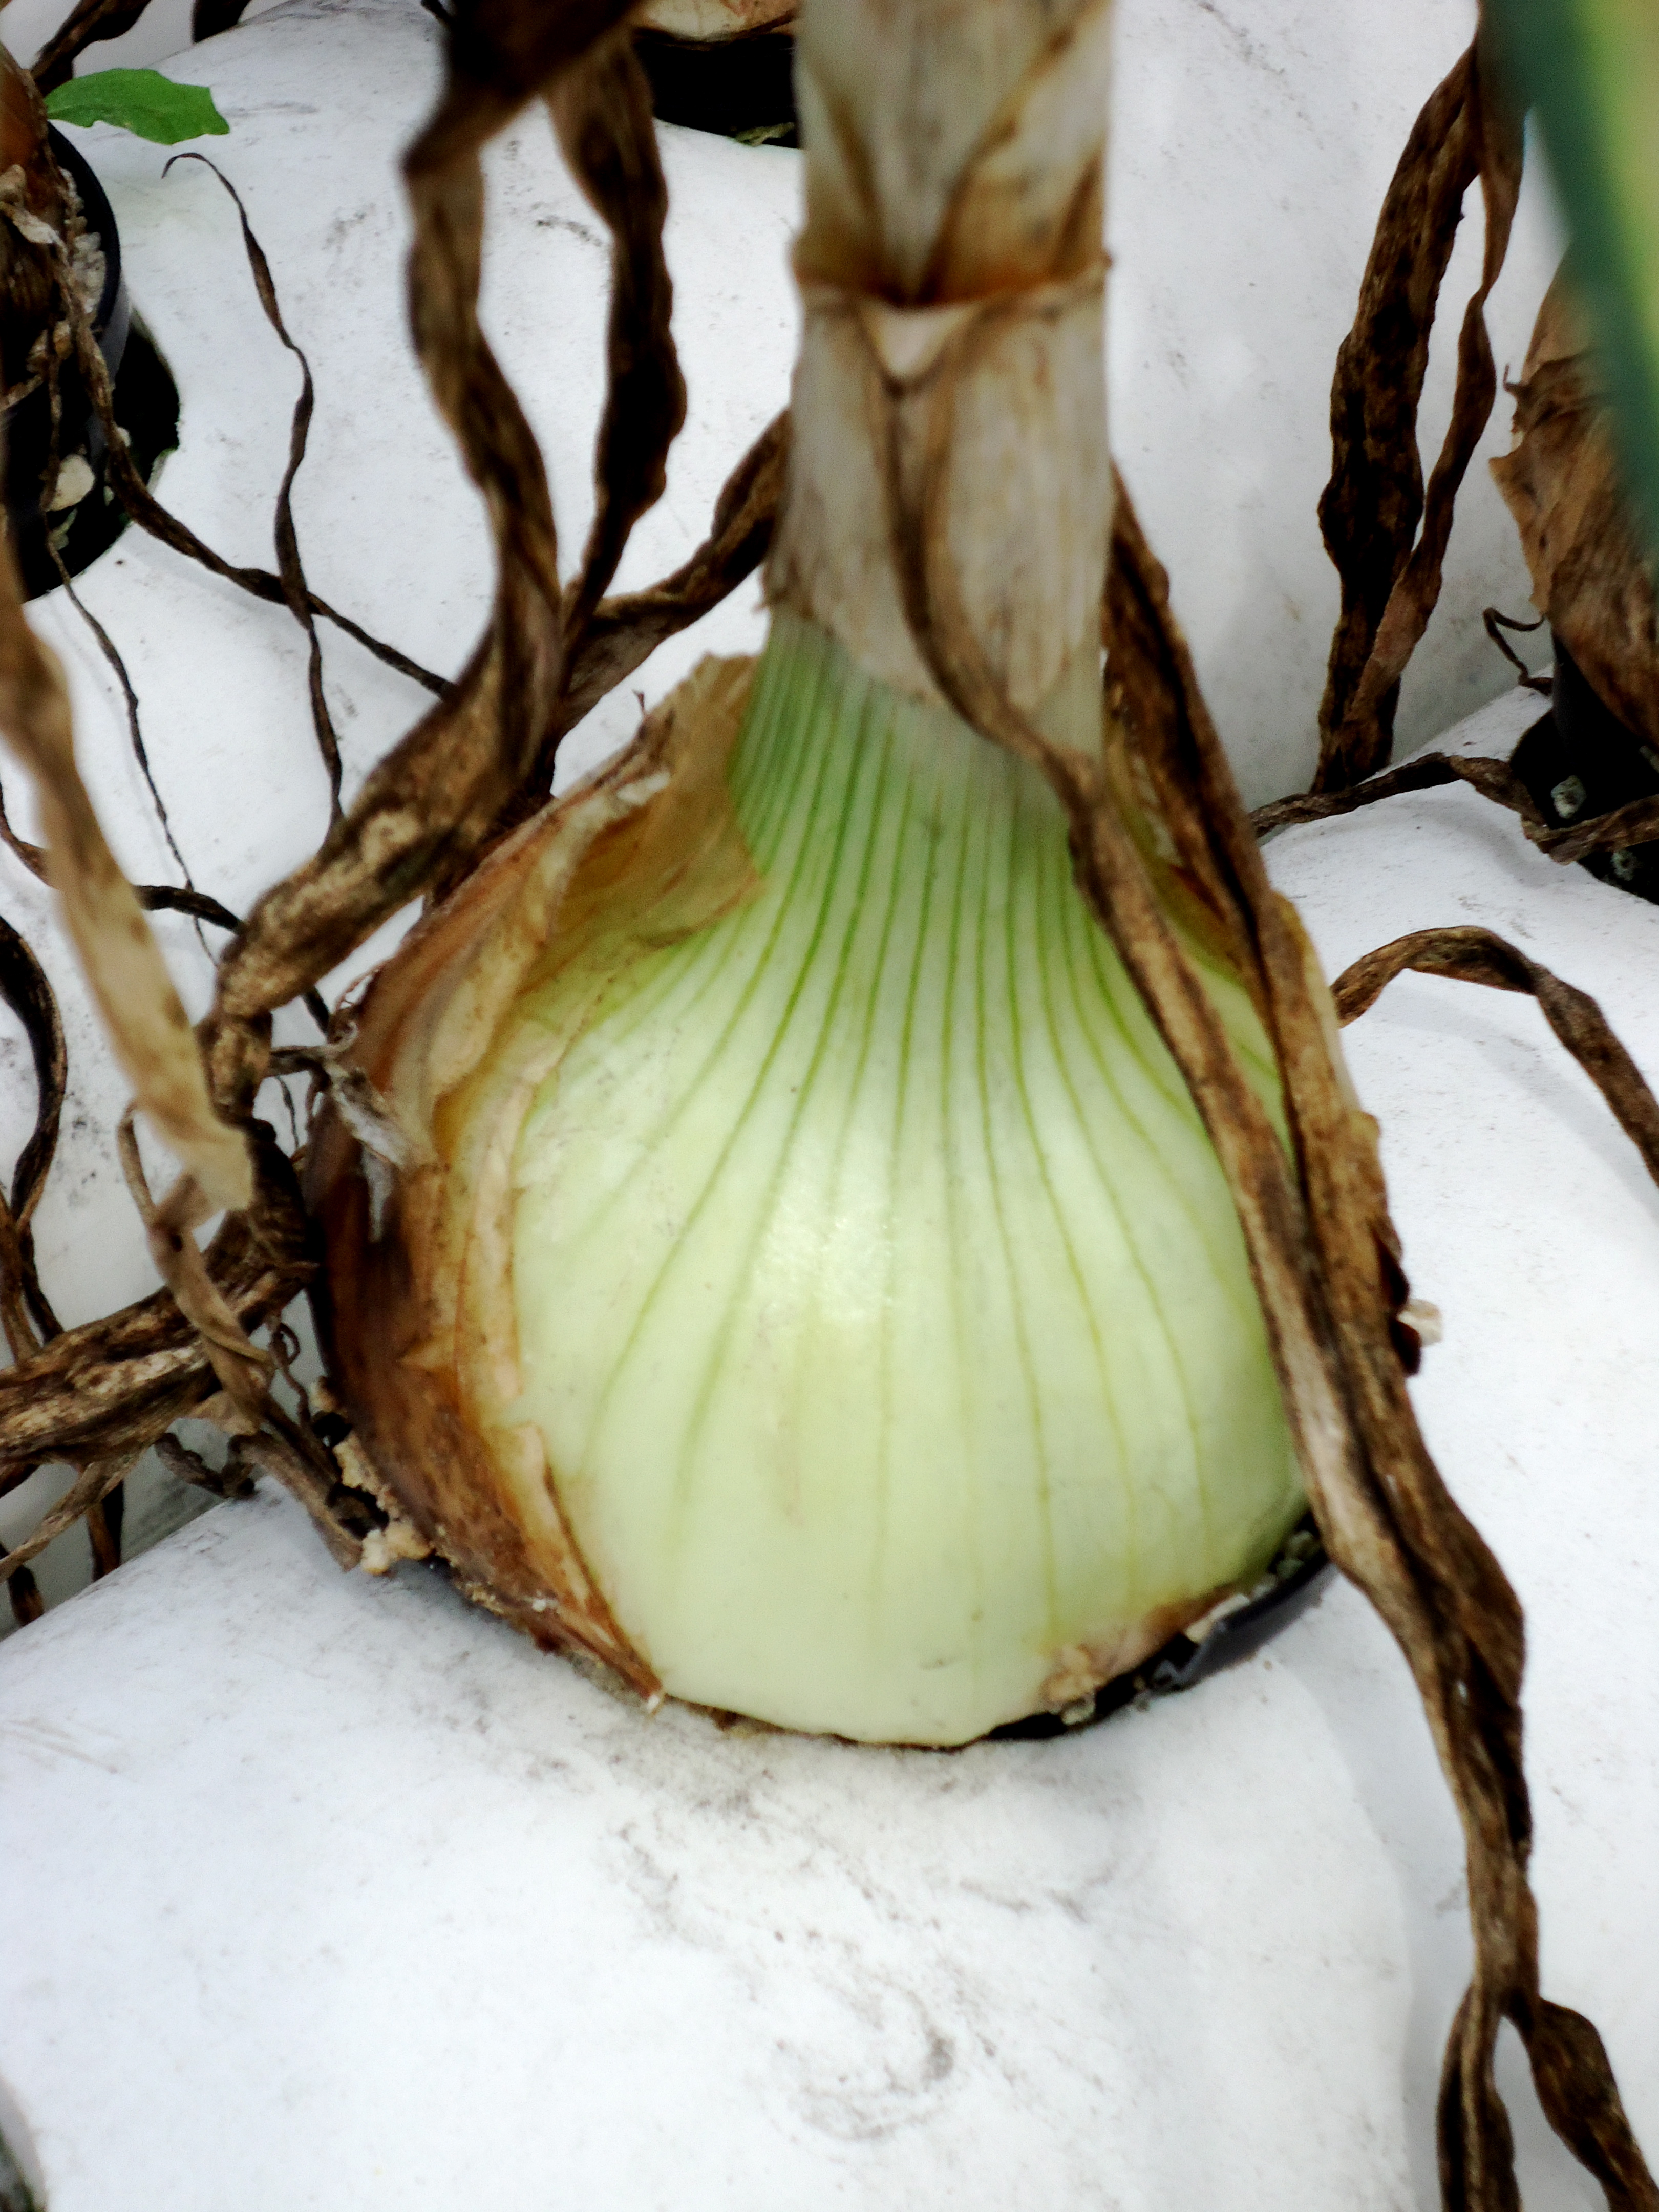 Lonesome Luscious sweet onion - sweeter than a Vidalia! "I give them ...